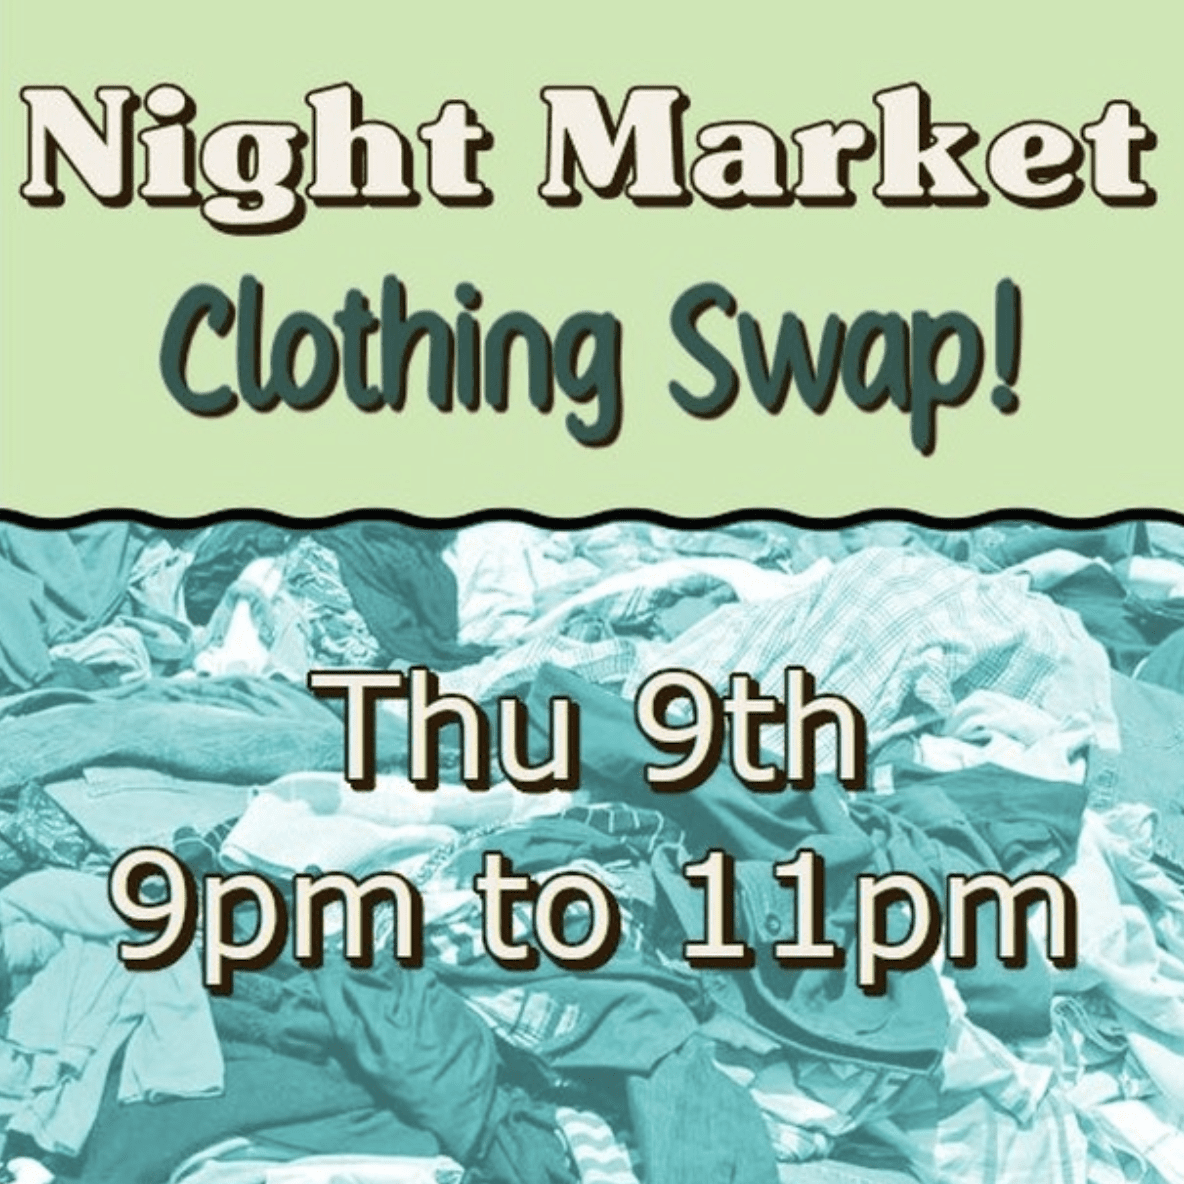 Night Market Clothing Swap